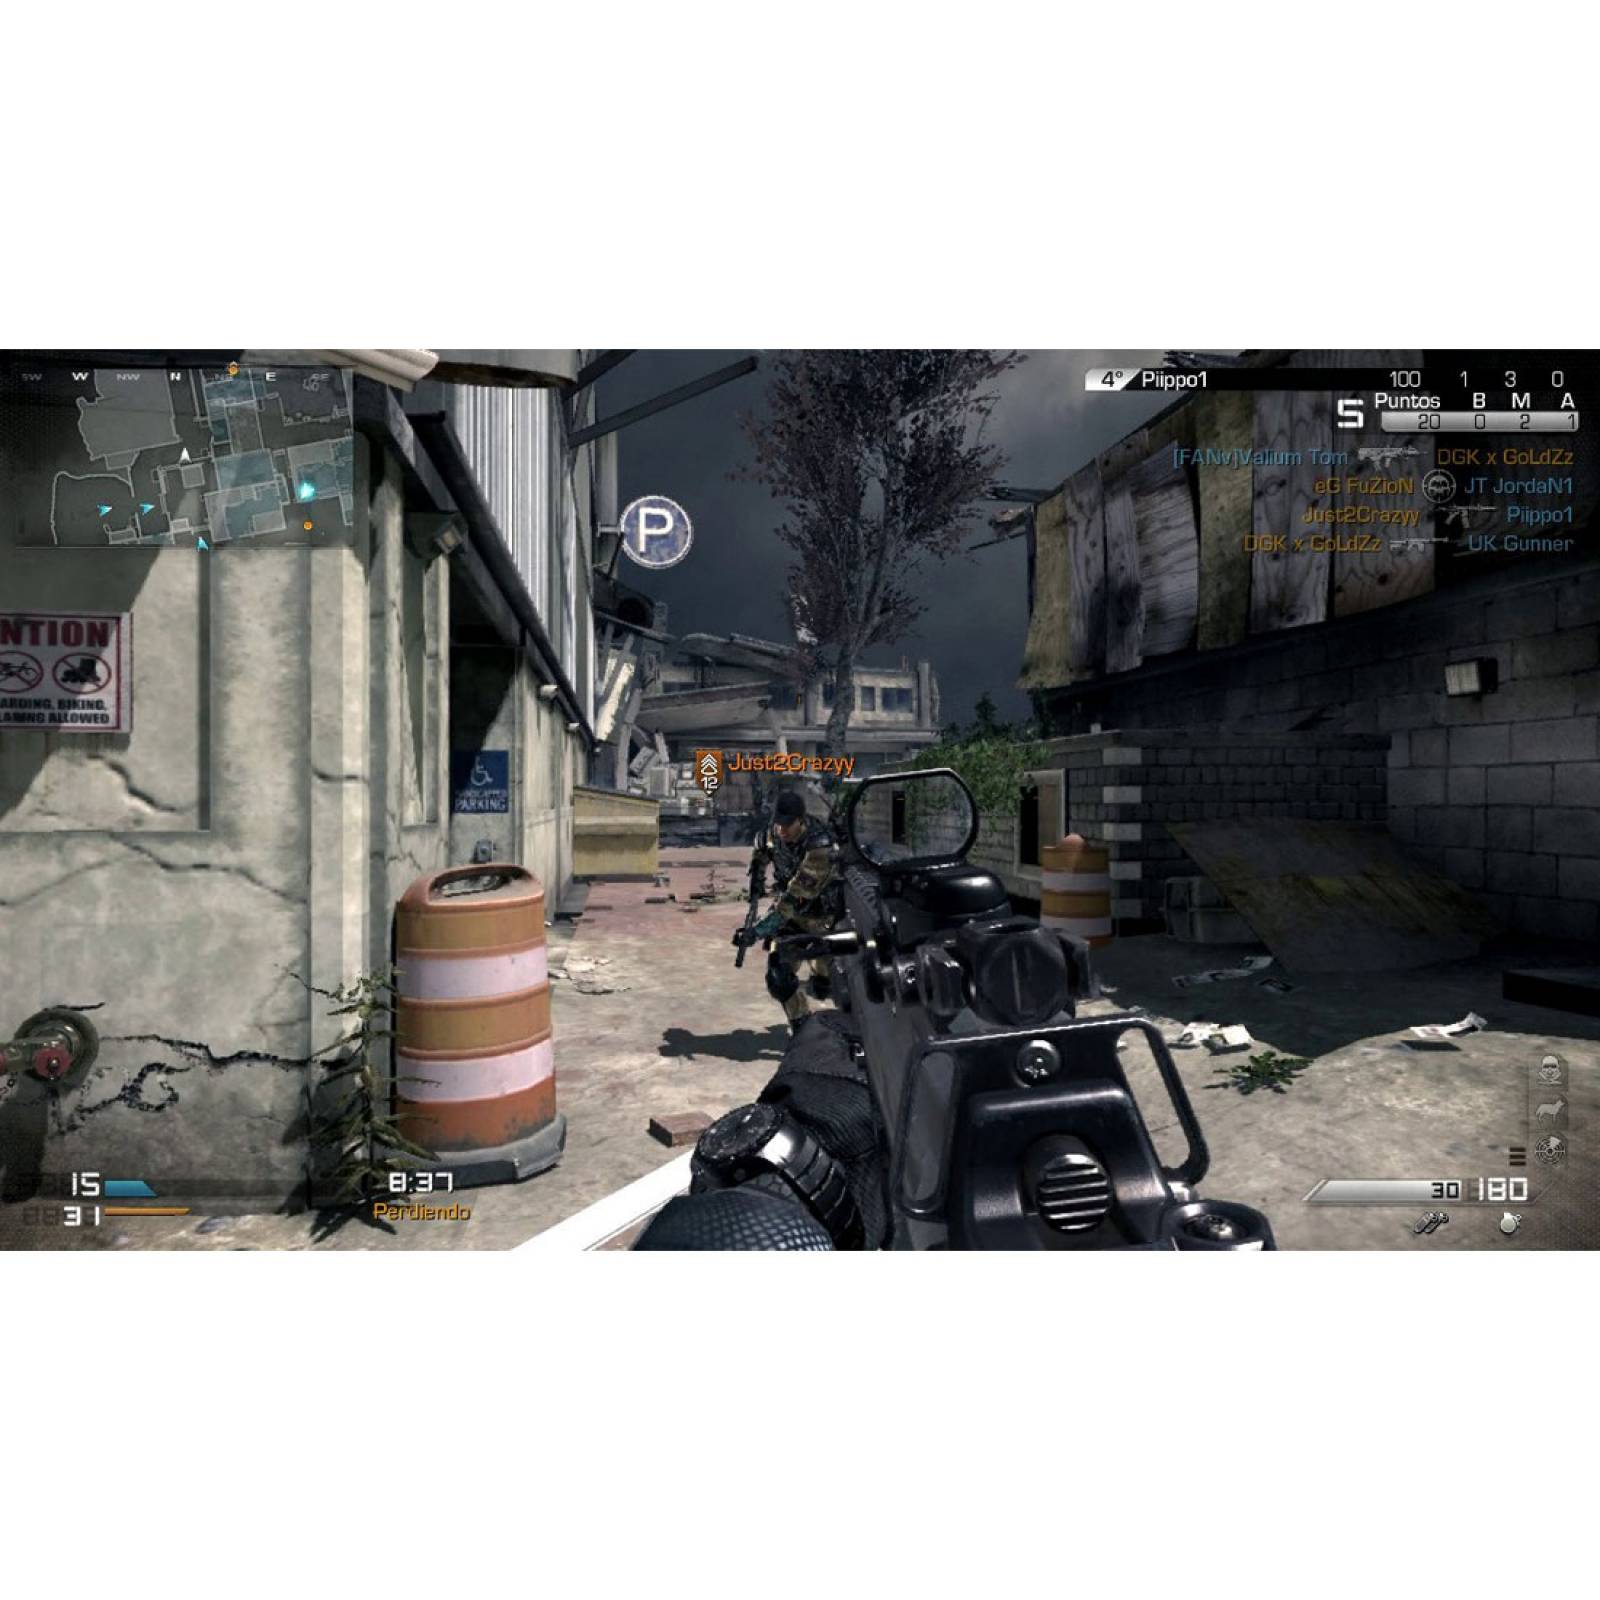 Juego Call of Duty Ghost Xbox 360 Ibushak Gaming